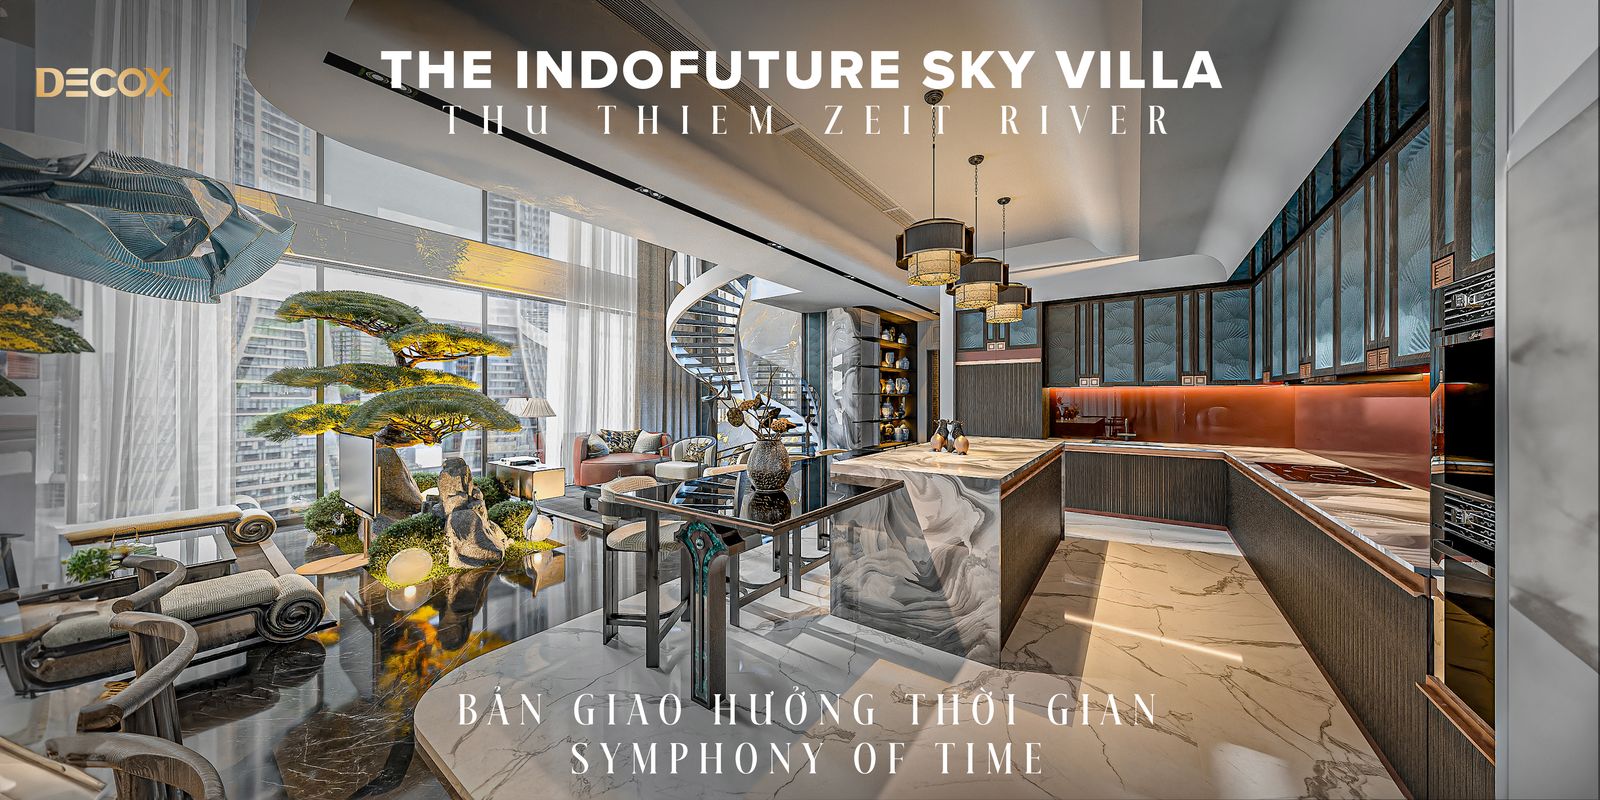 The Indofuture Sky Villa